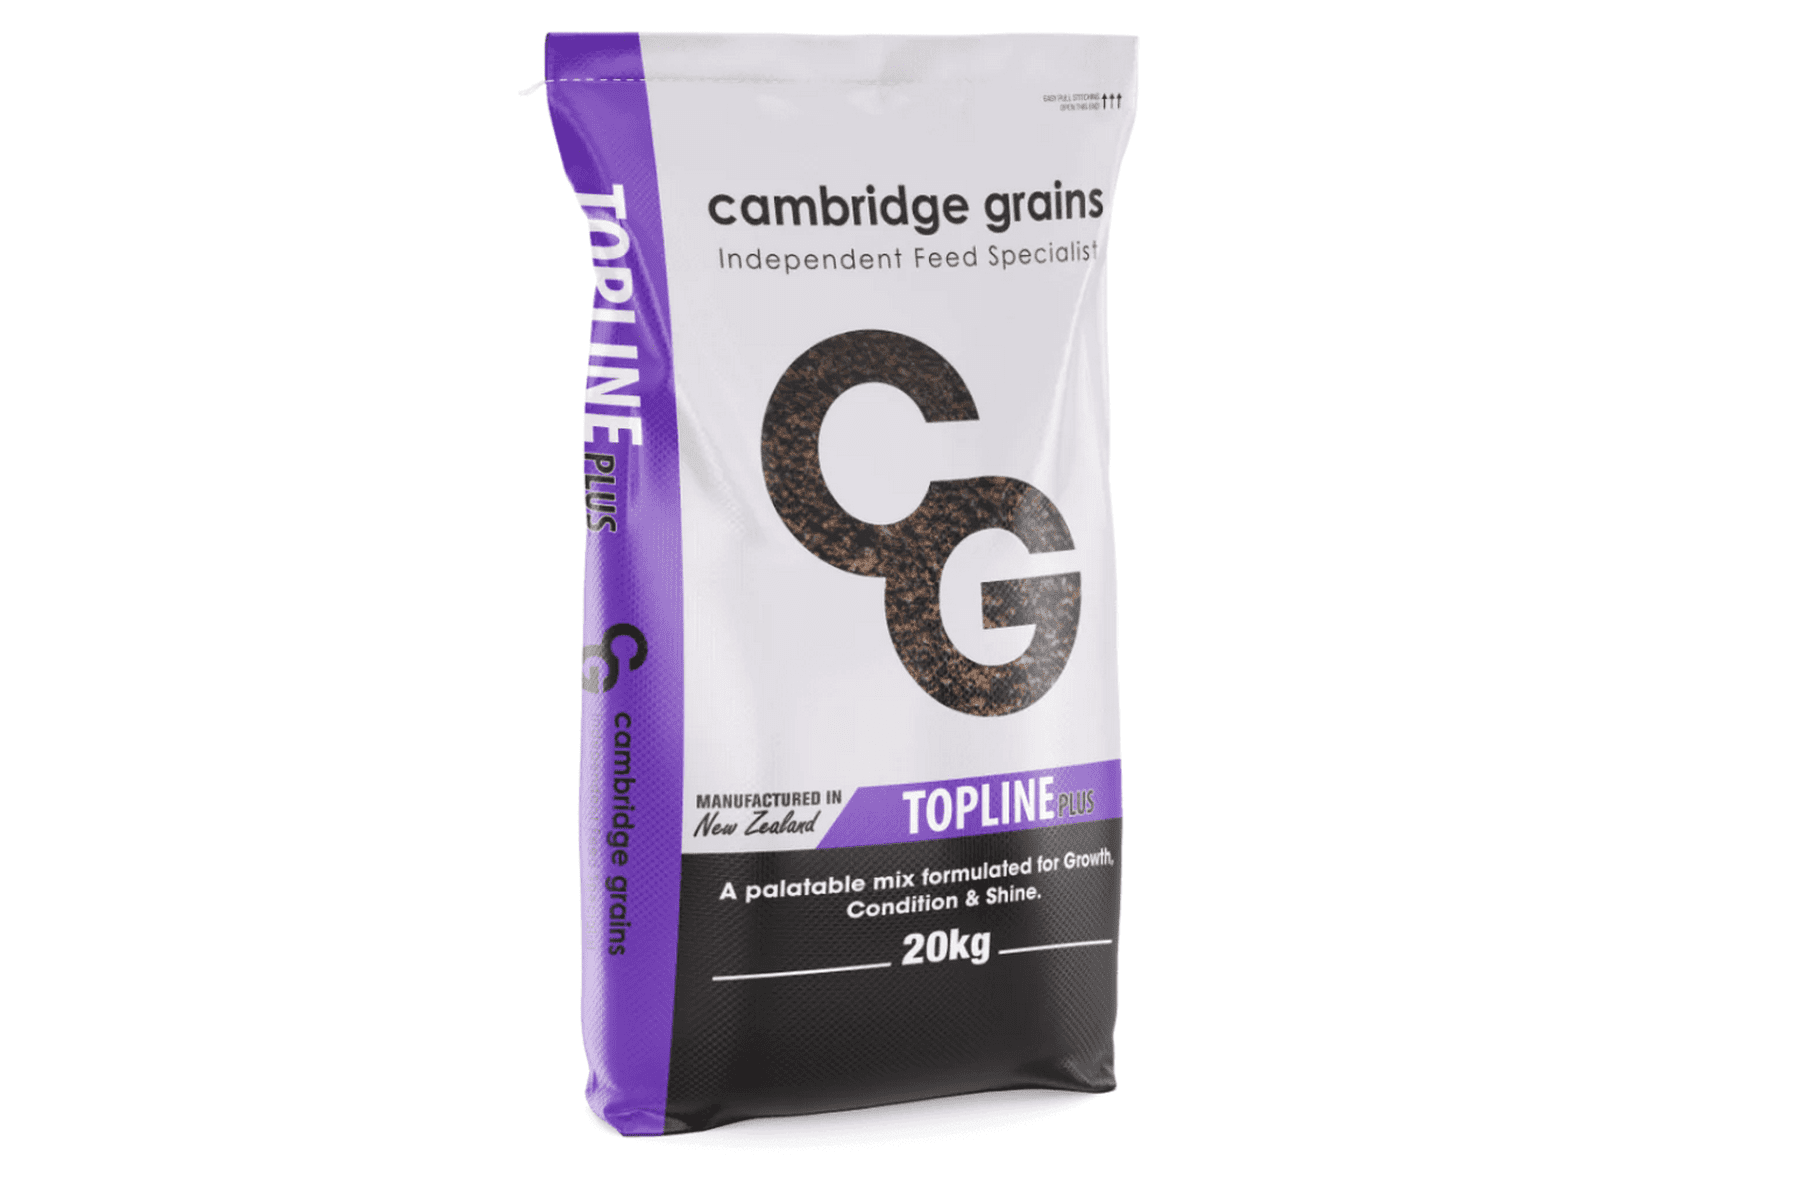 Cambridge Grains Topline Plus